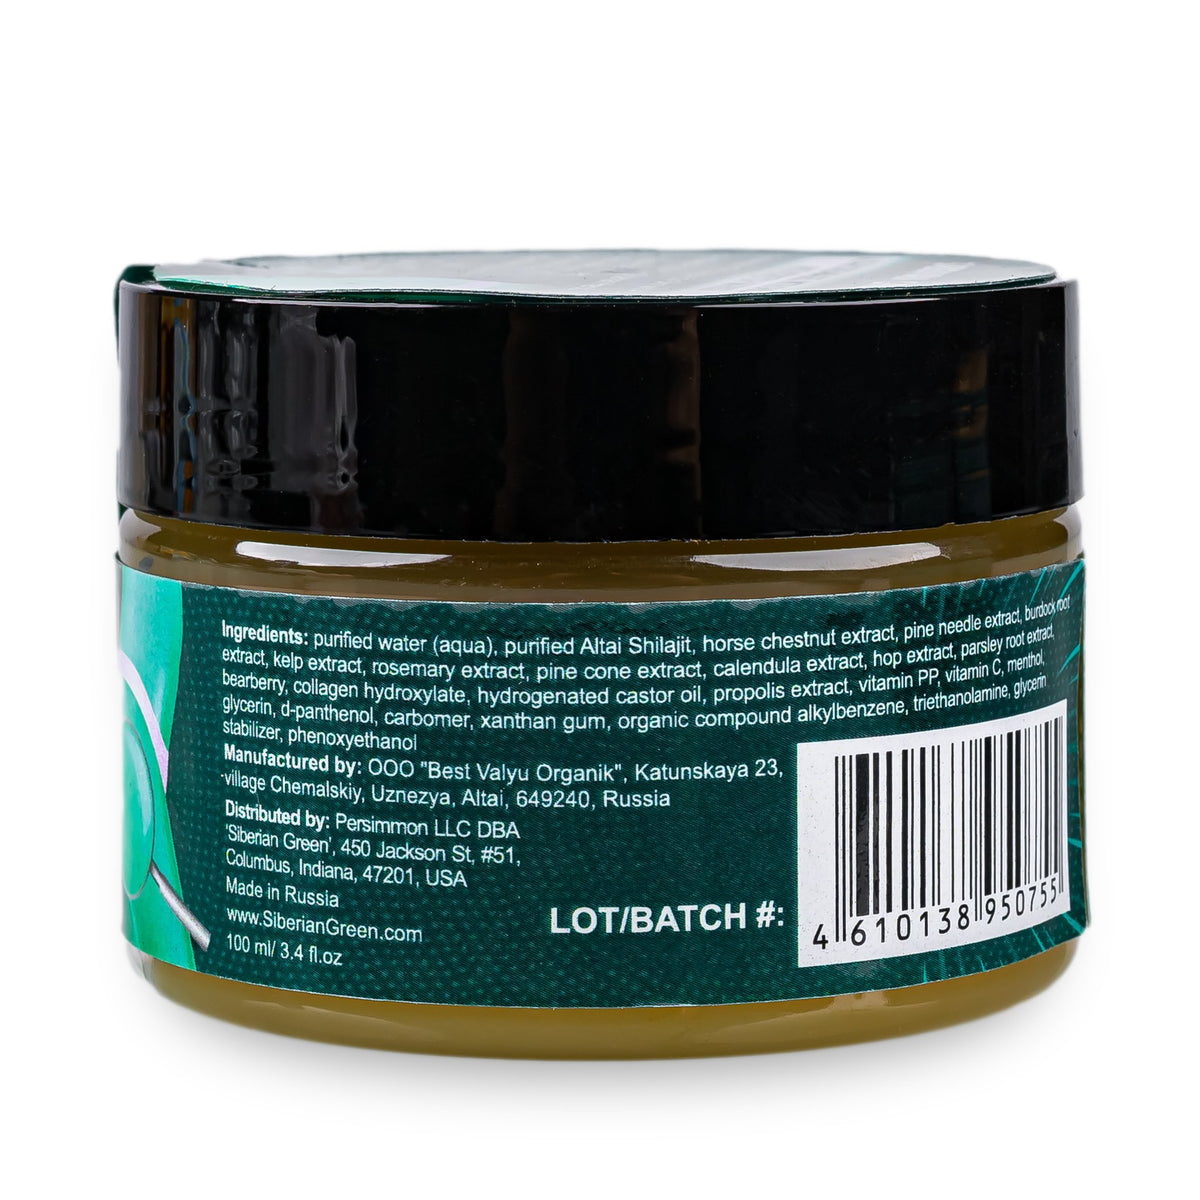 Altai Cream-Gel “Anti-Stretch Marks” with Shilajit and Siberian Herbs 100ml